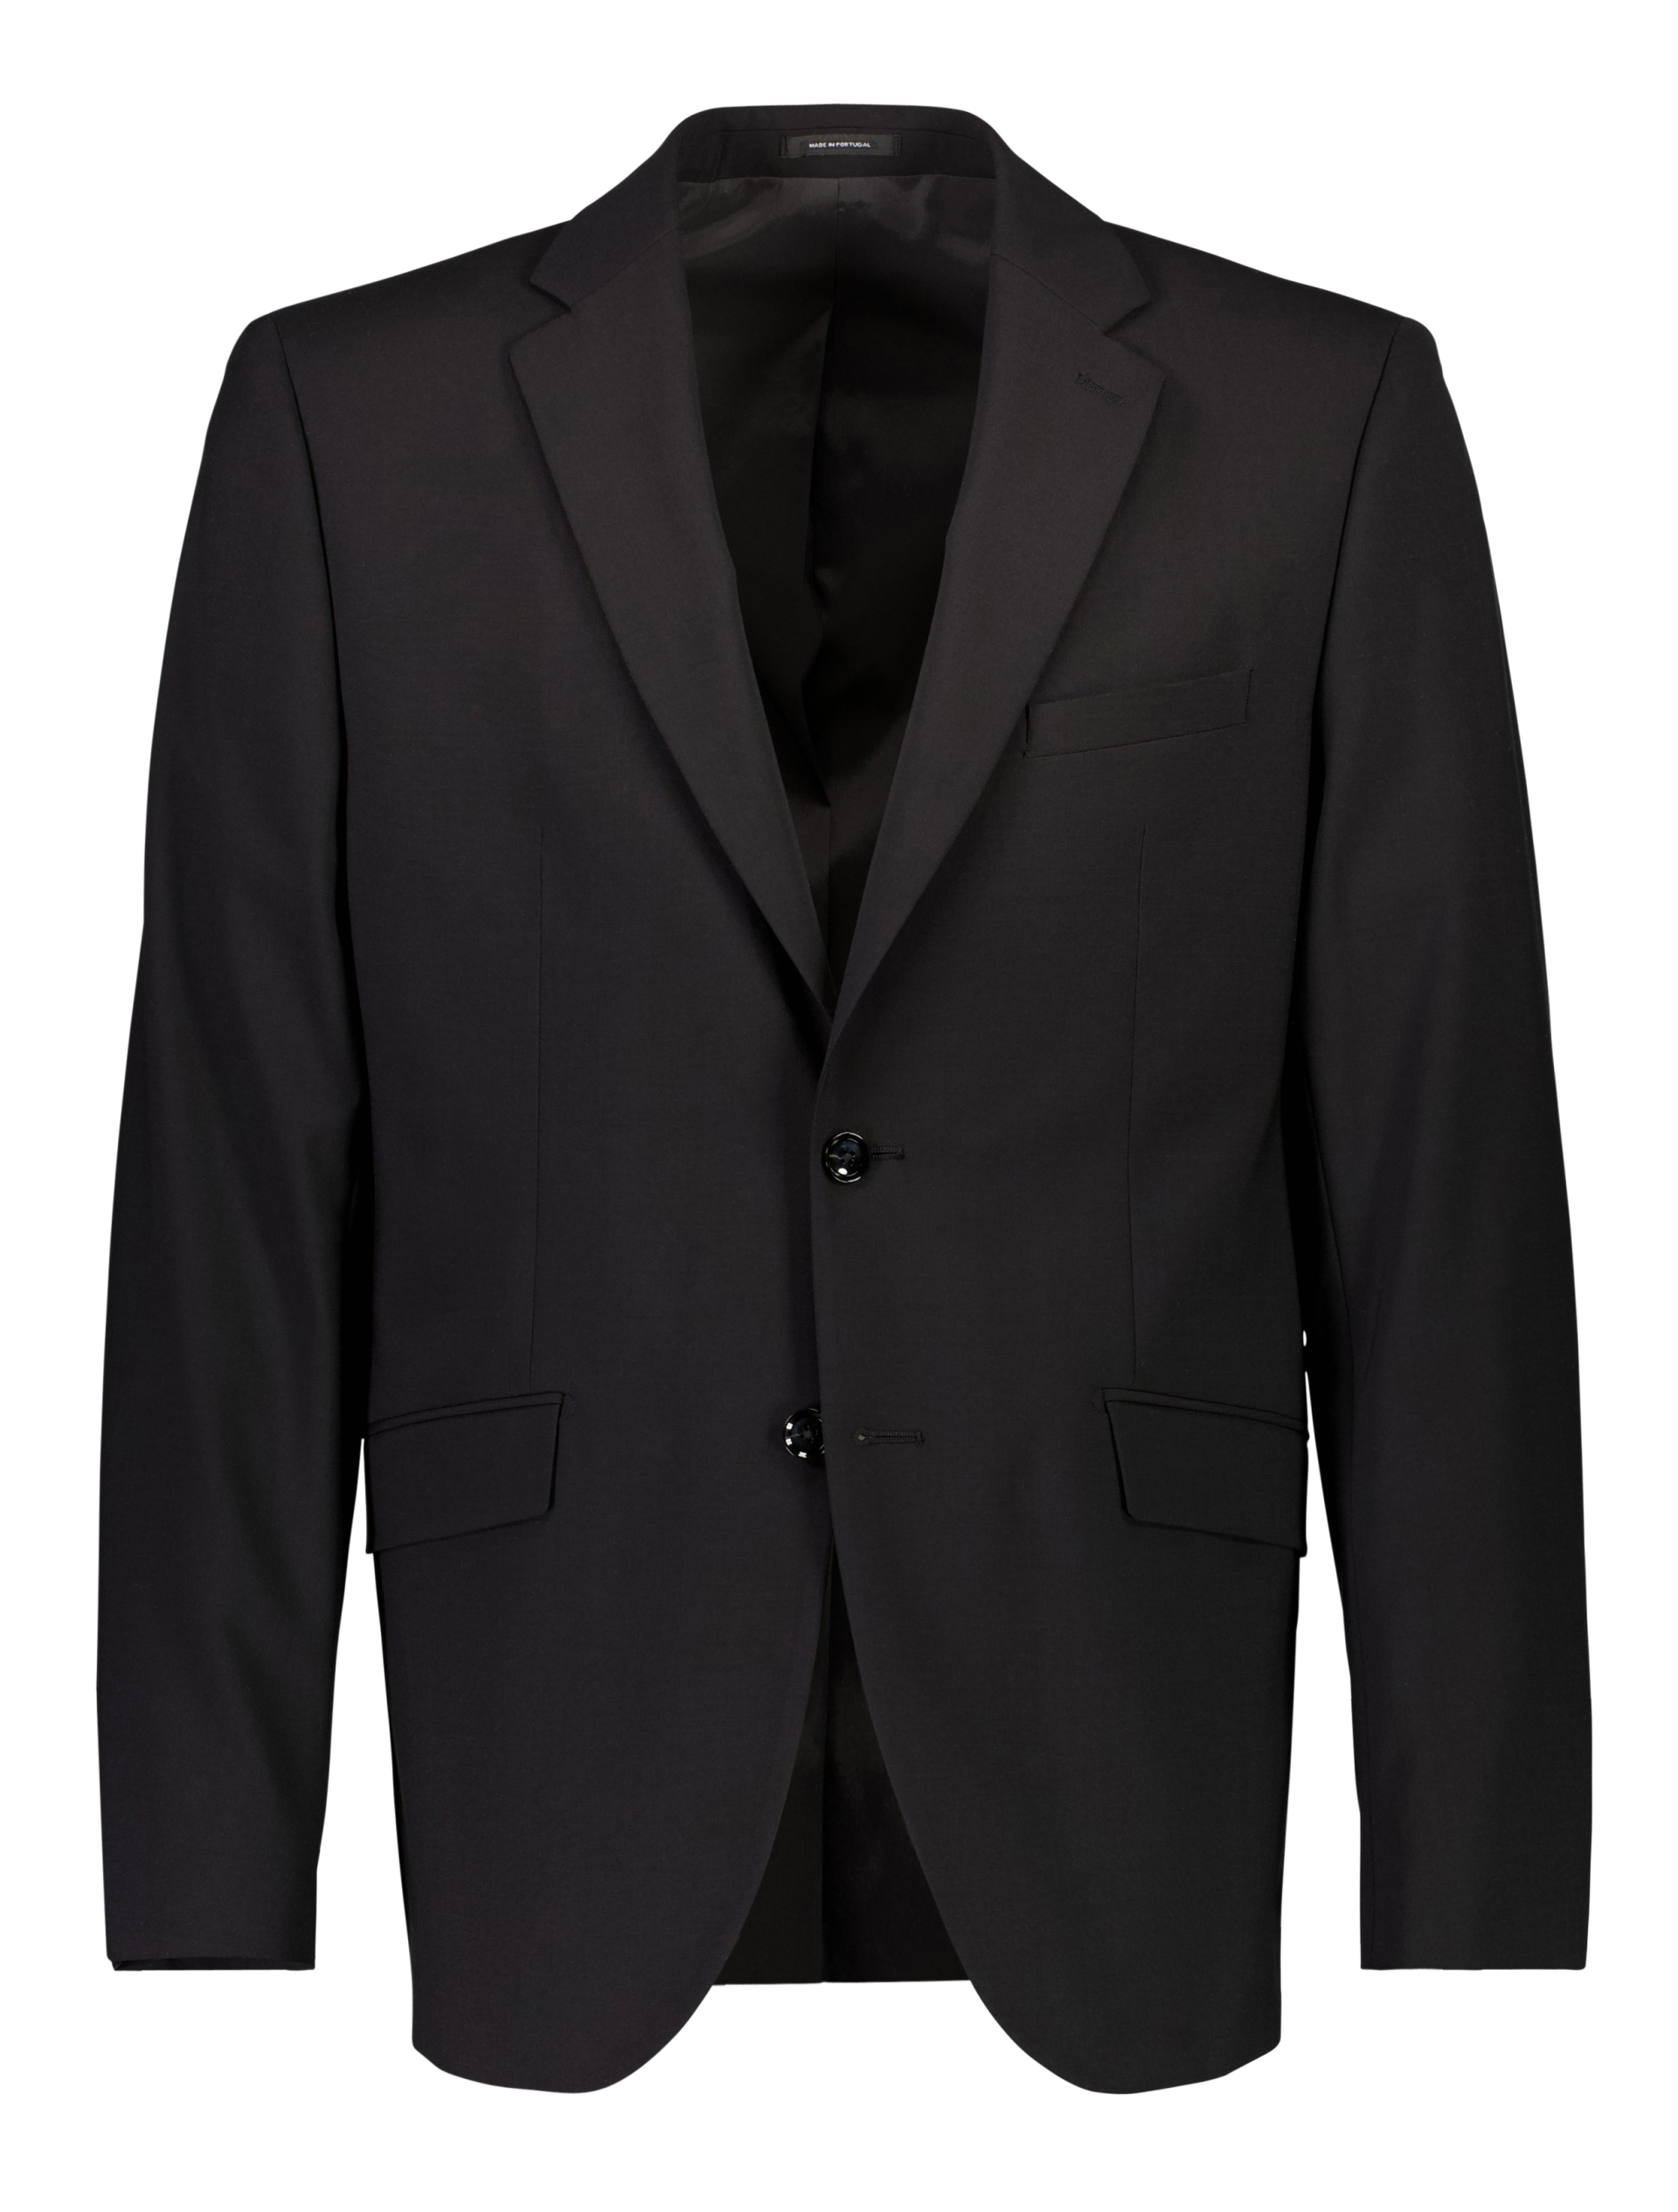 Lindbergh Suit jacket black / black